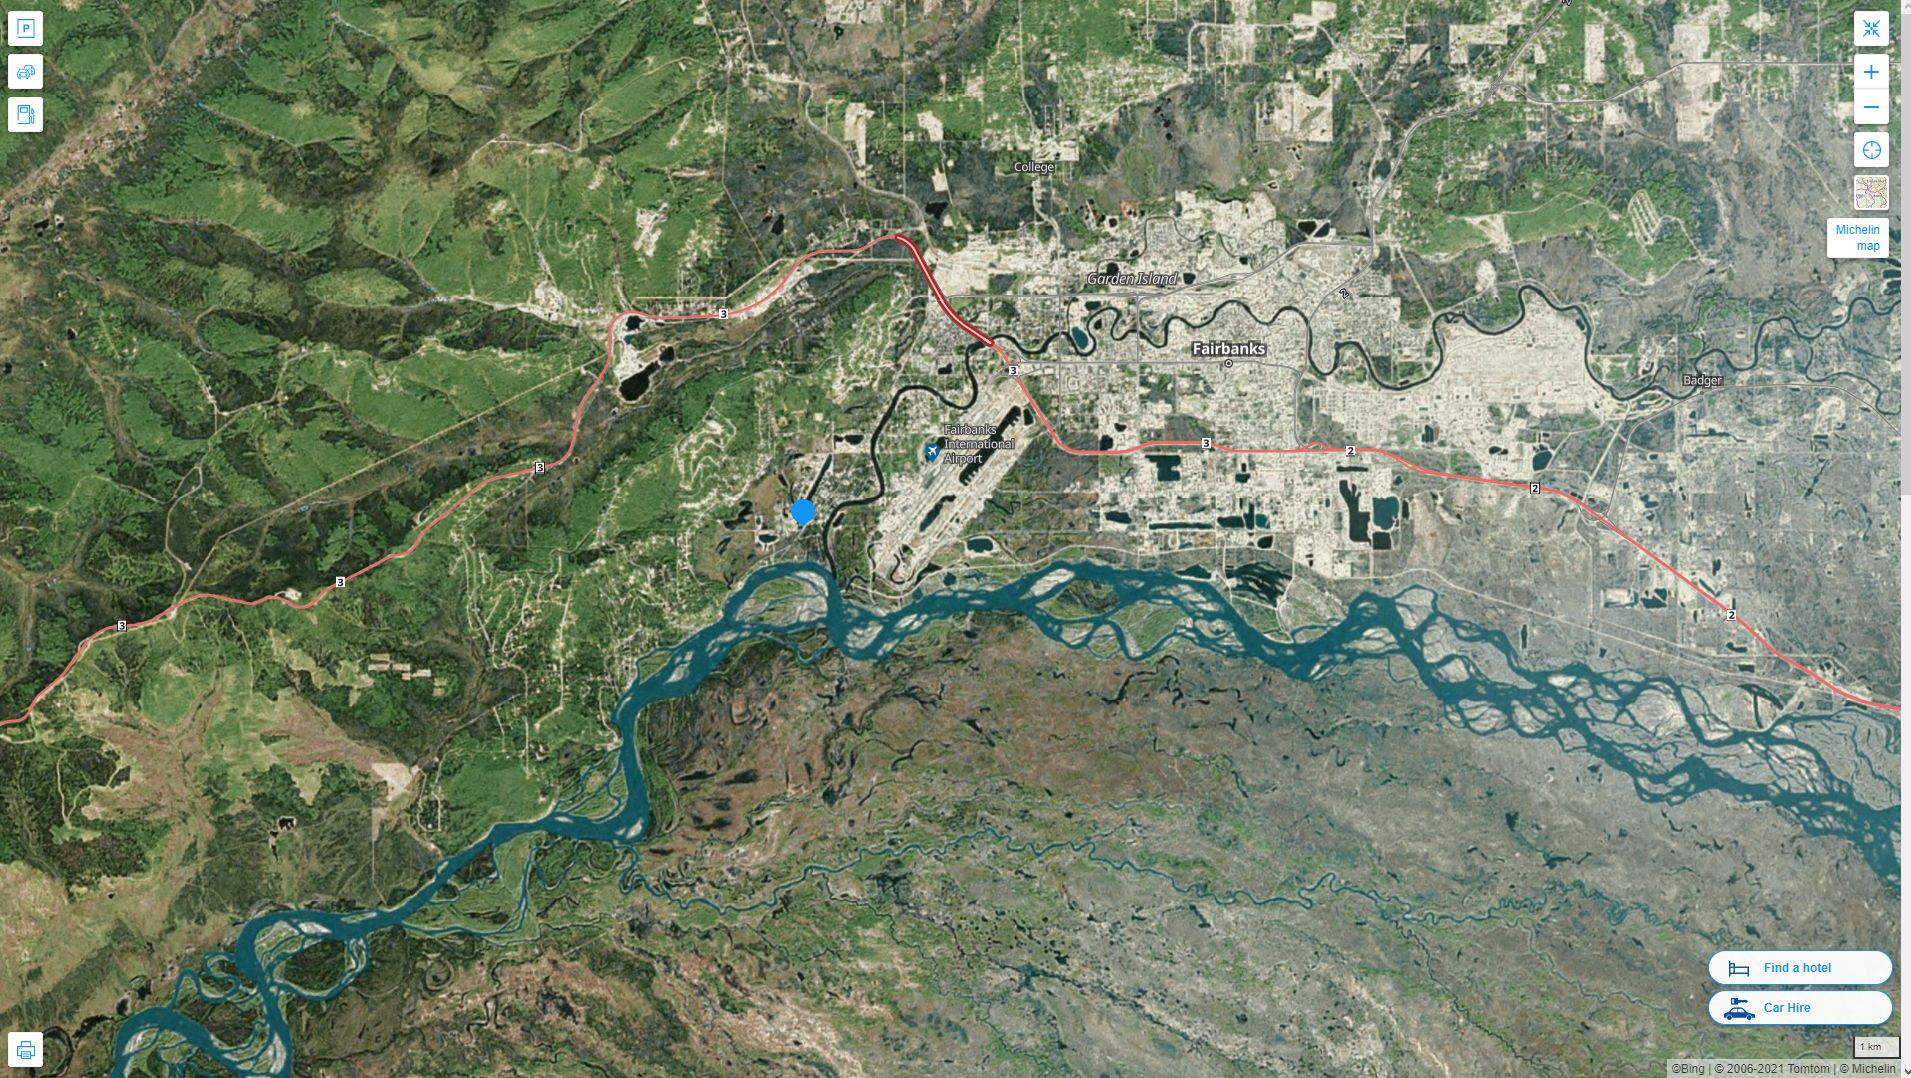 Chena Ridge Alaska Highway and Road Map with Satellite View